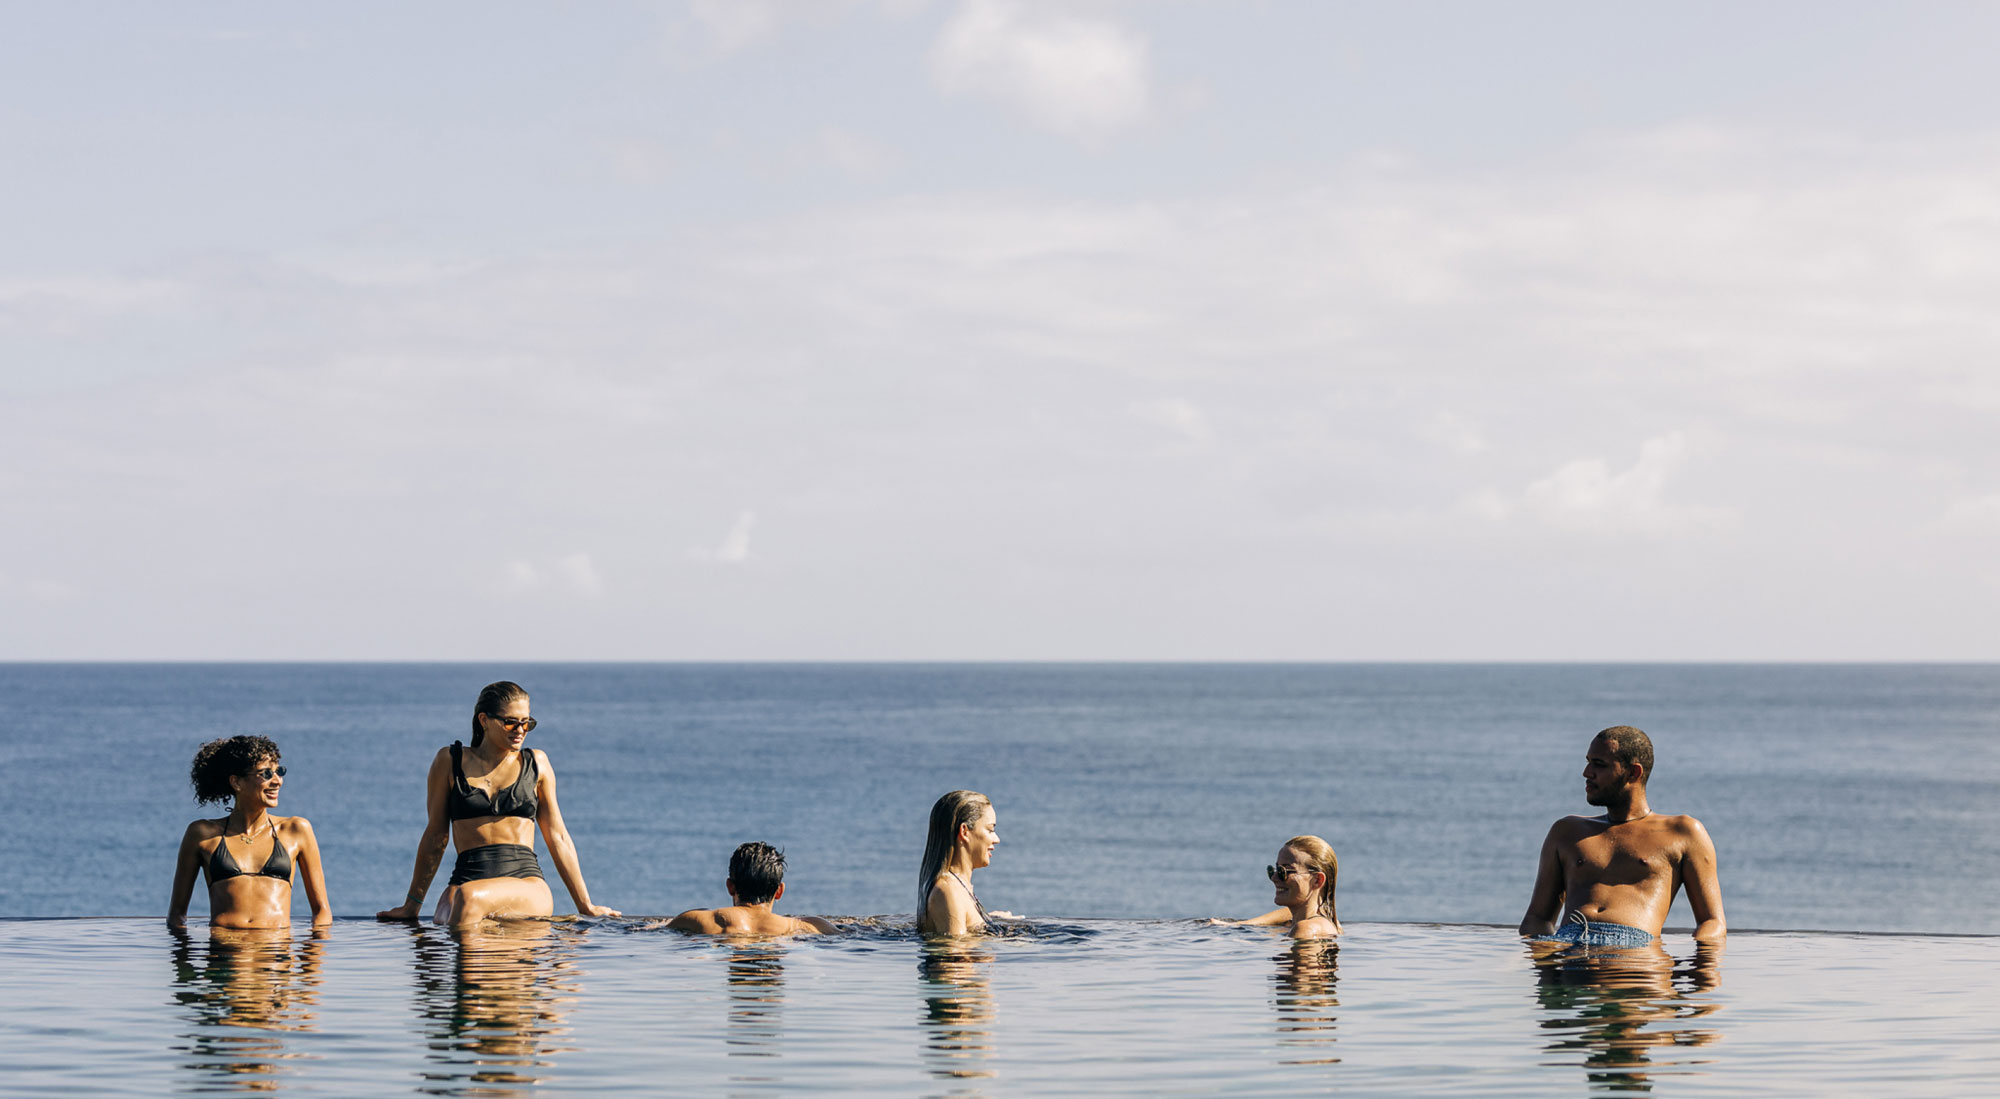 ÀNI Dominican Republic - Infinity Pool Overlooking the Ocean